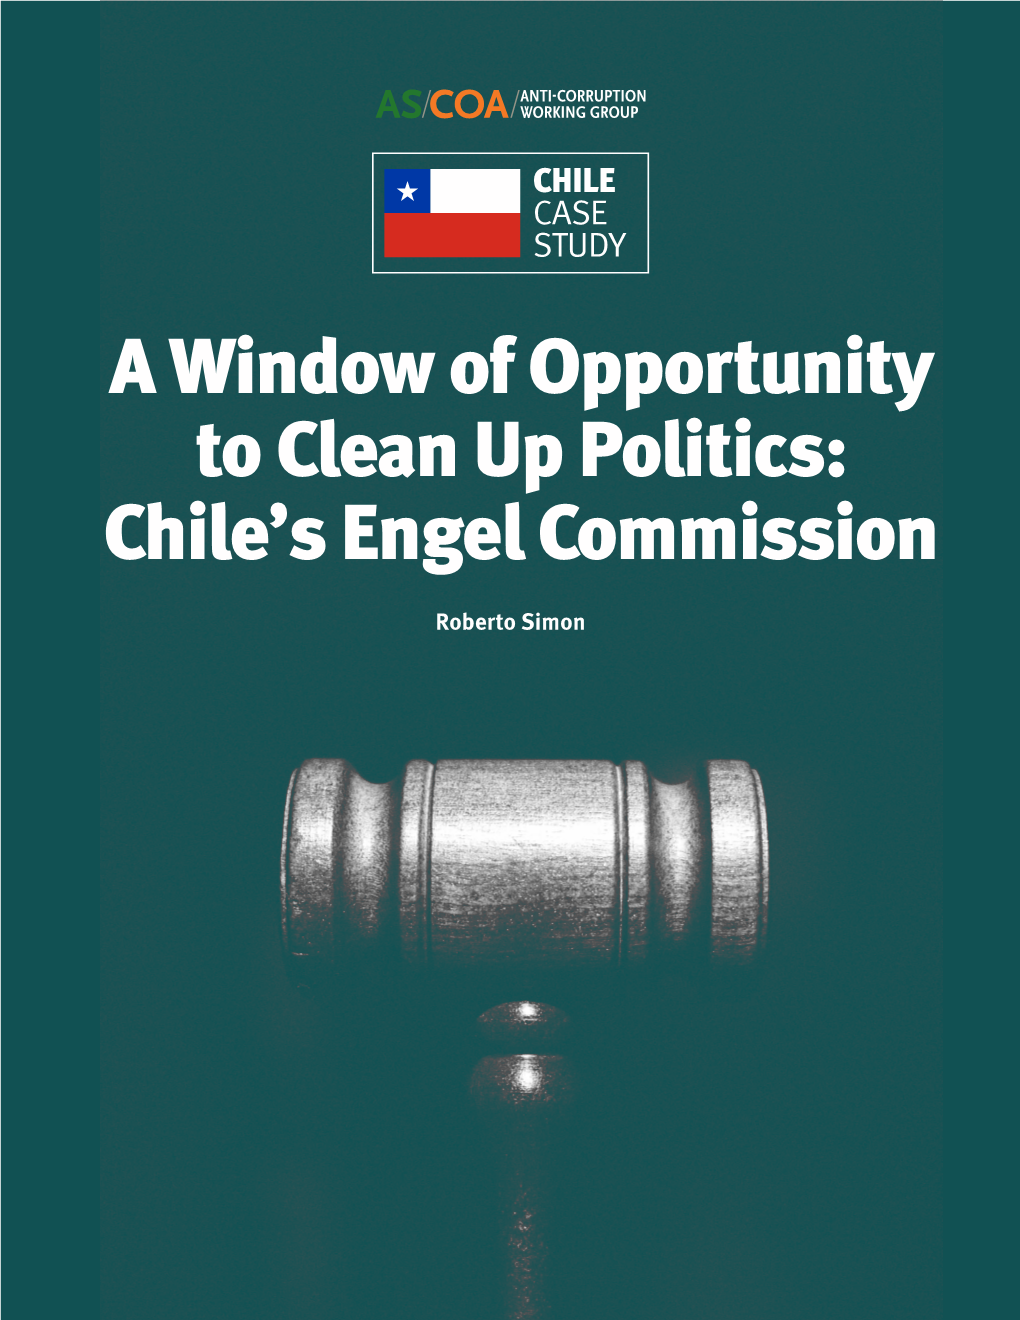 Chile's Engel Commission